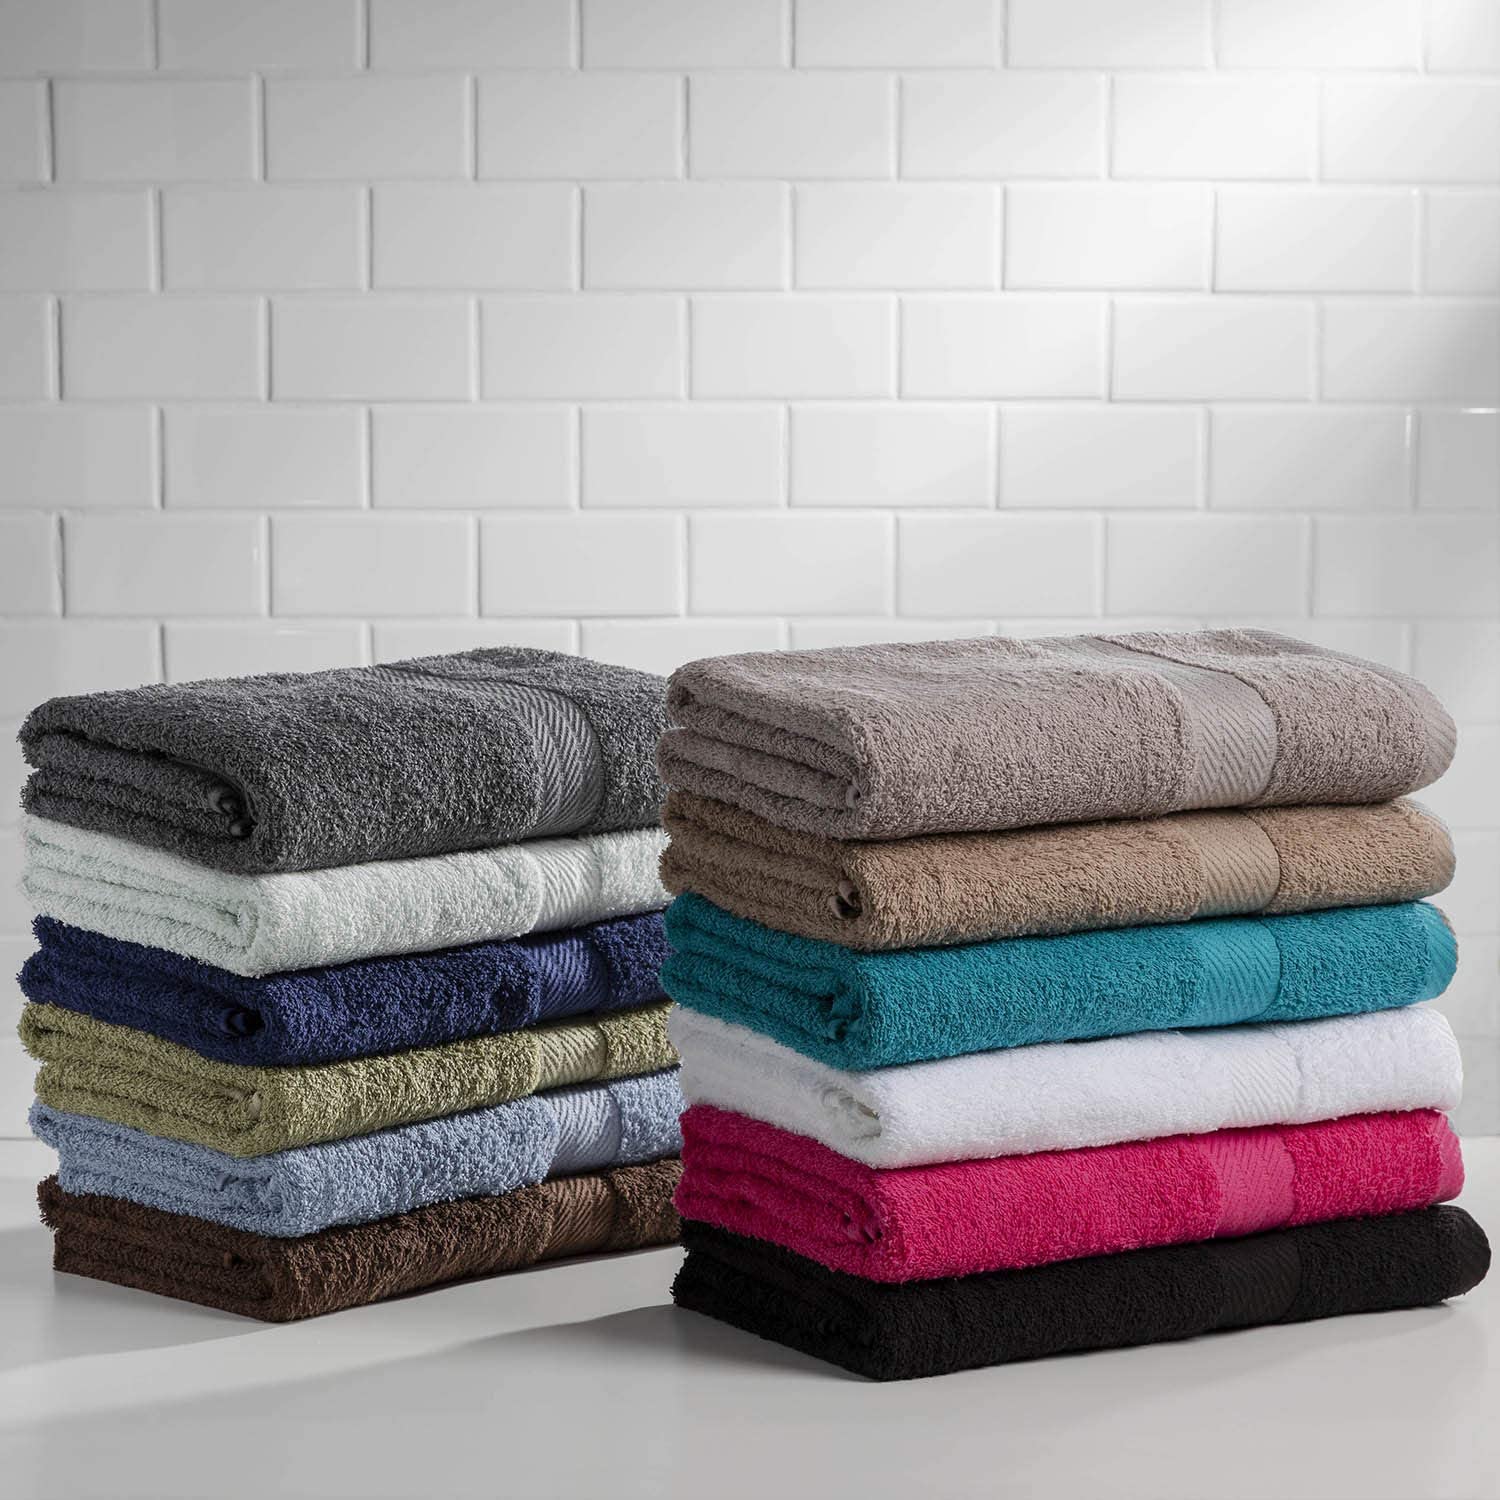 Baltic Linen Ultra 100% Cotton Towels, 2 Bath Towels, 2 Hand Towels, 2 Washcloths, Grey, 6 Piece Set